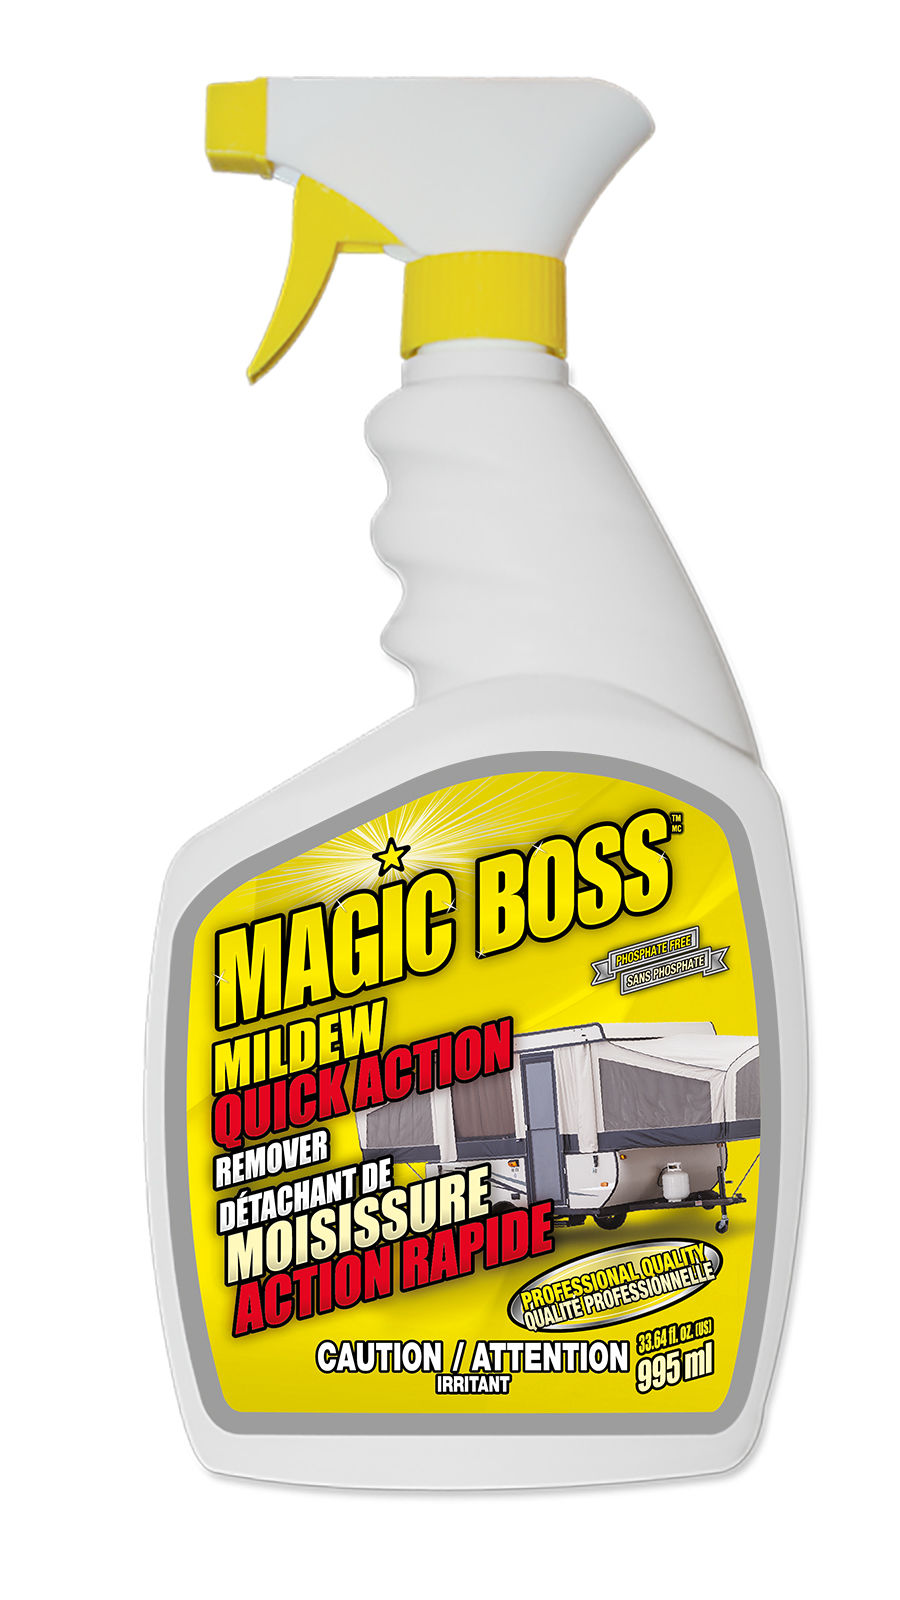 Magic Boss 2100 - Mildew Quick Action Remover (995 ml)